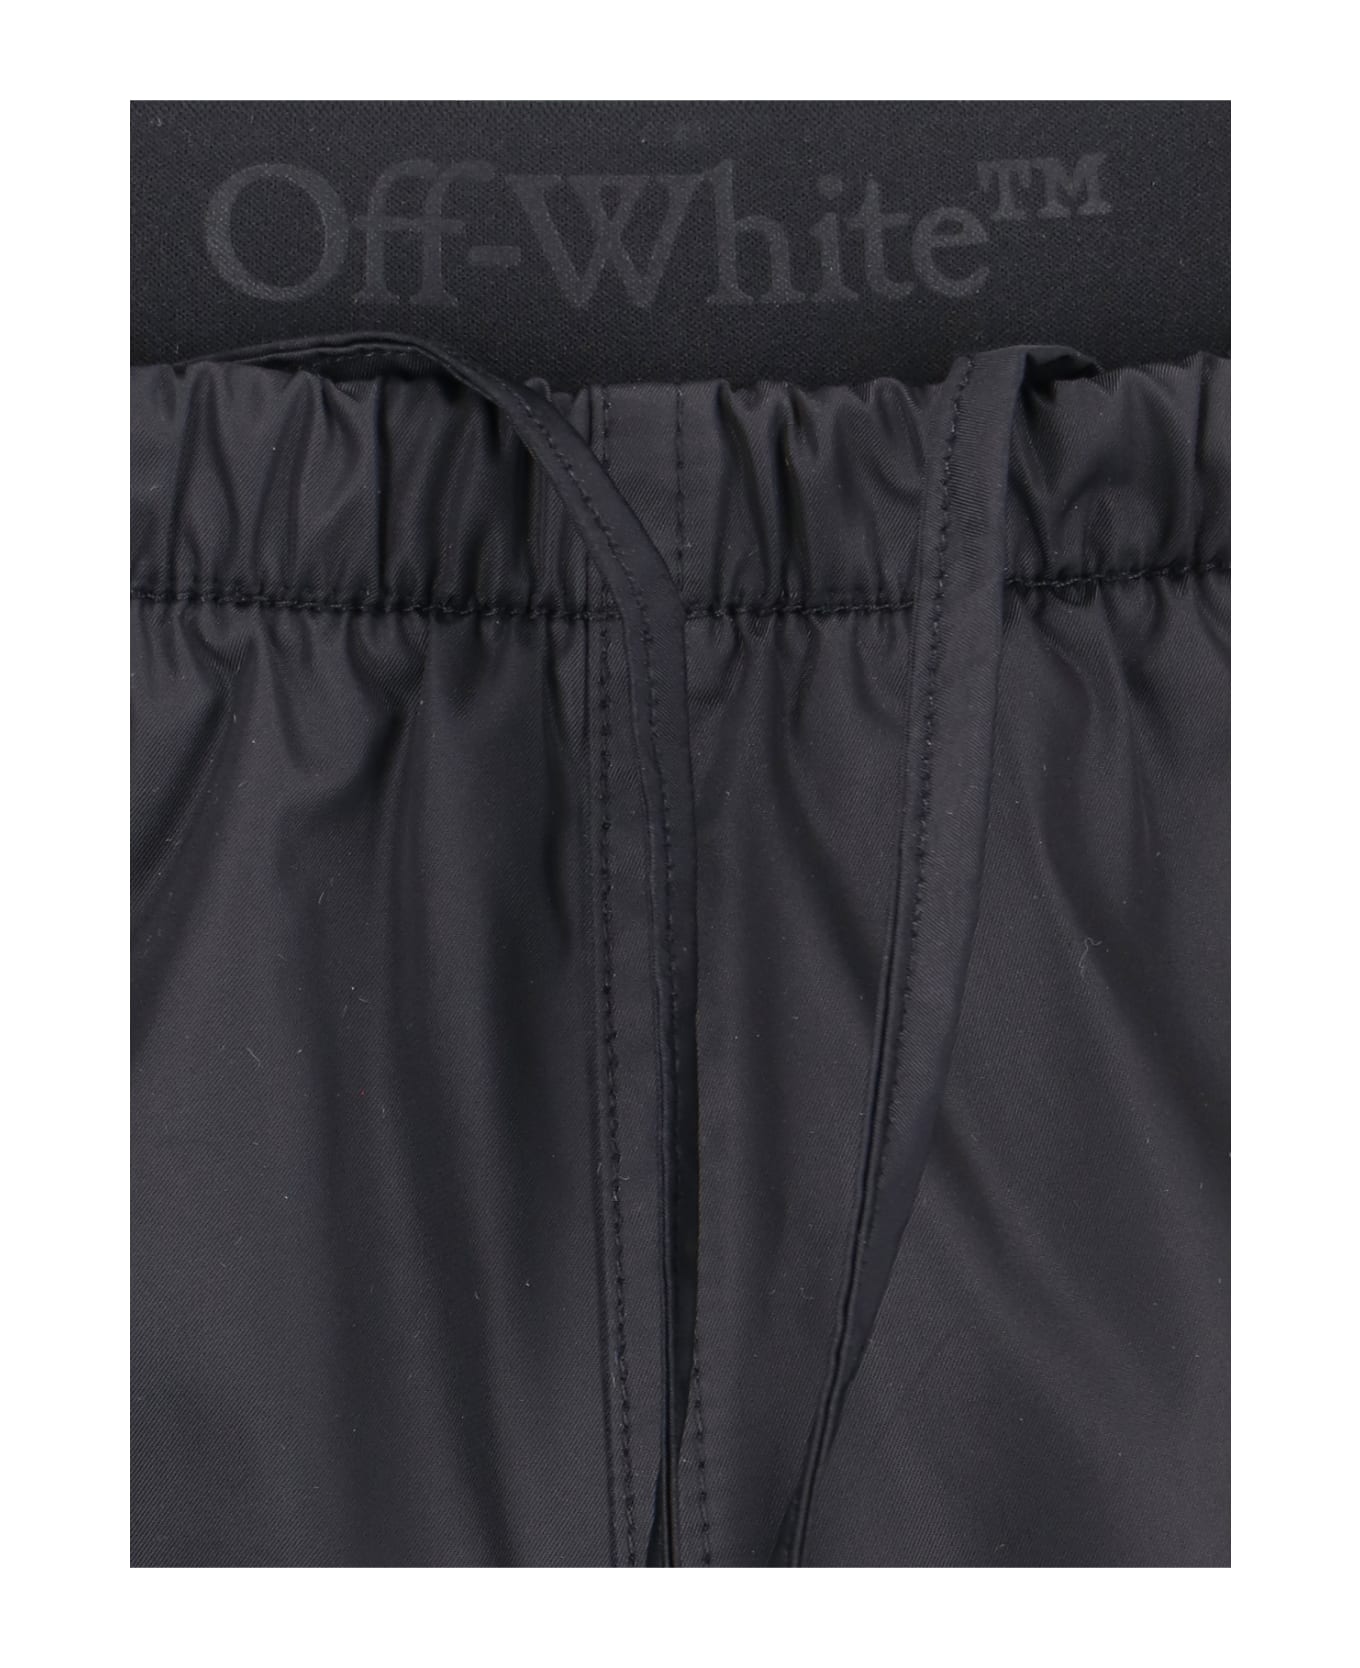 Off-White Logo Swim Shorts - Black